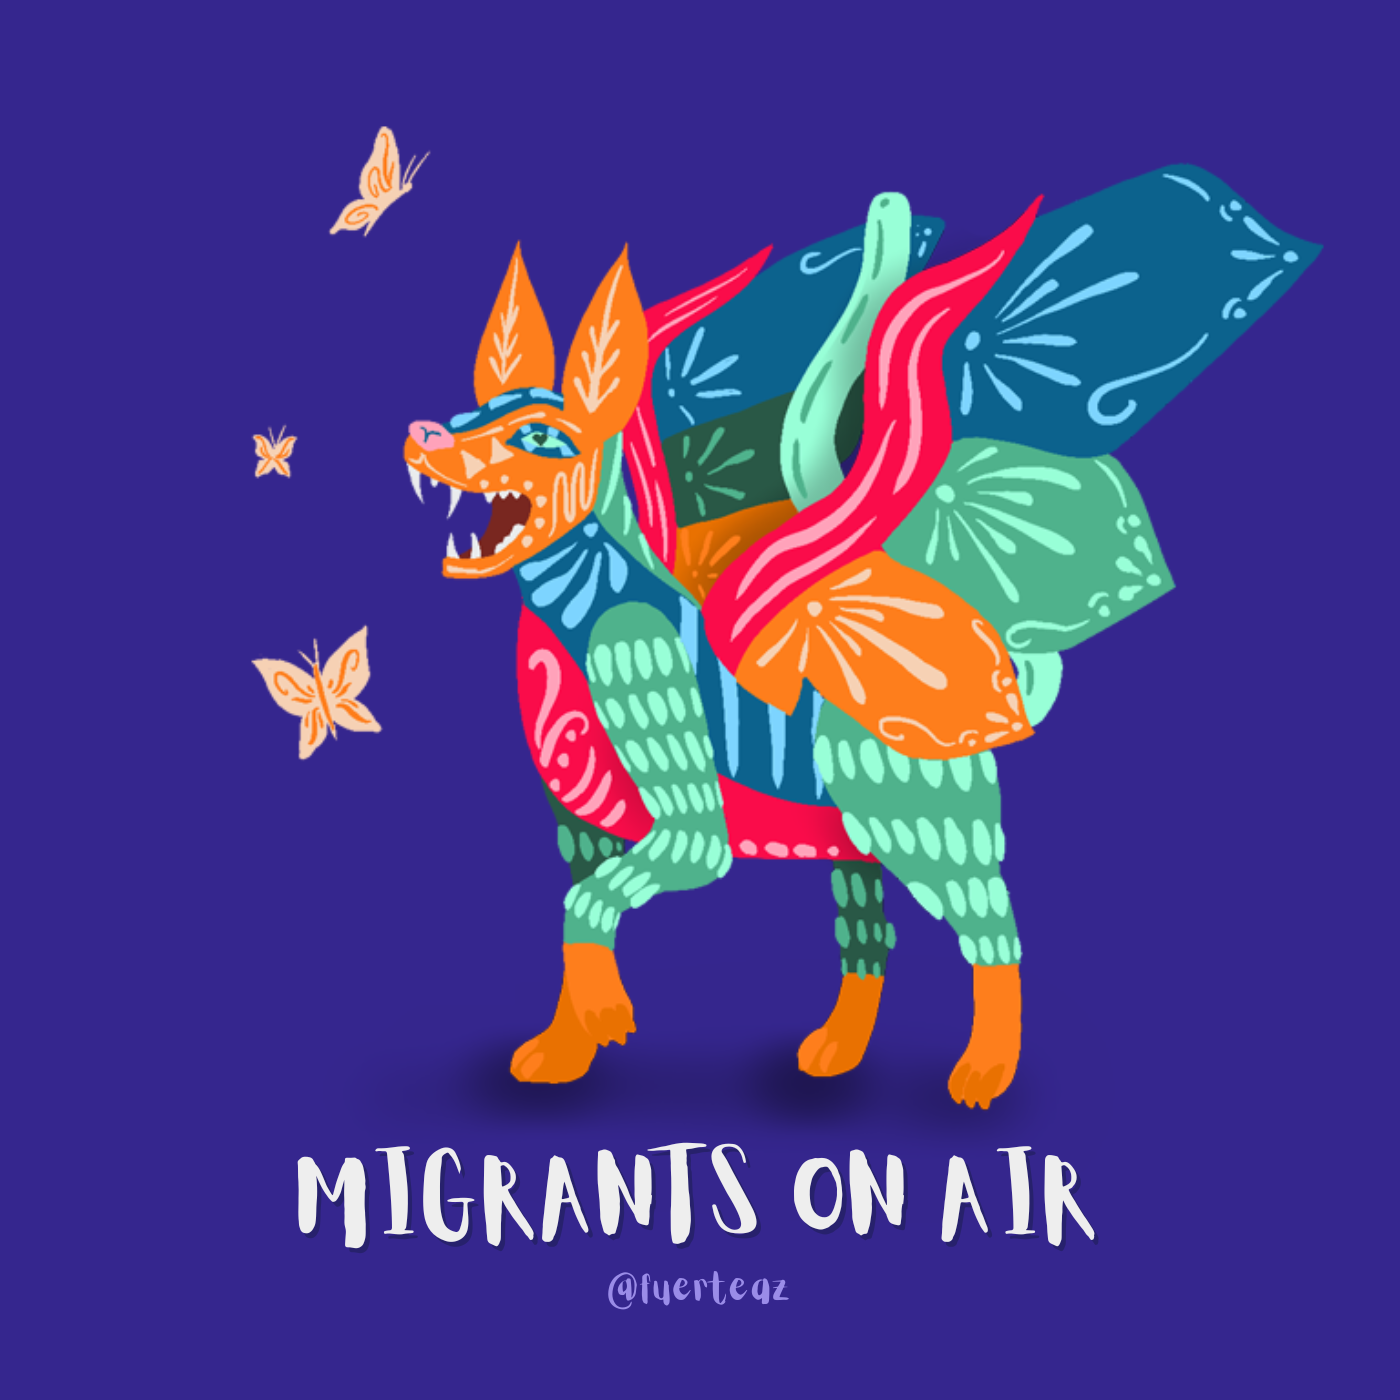 Migrants On Air's artwork